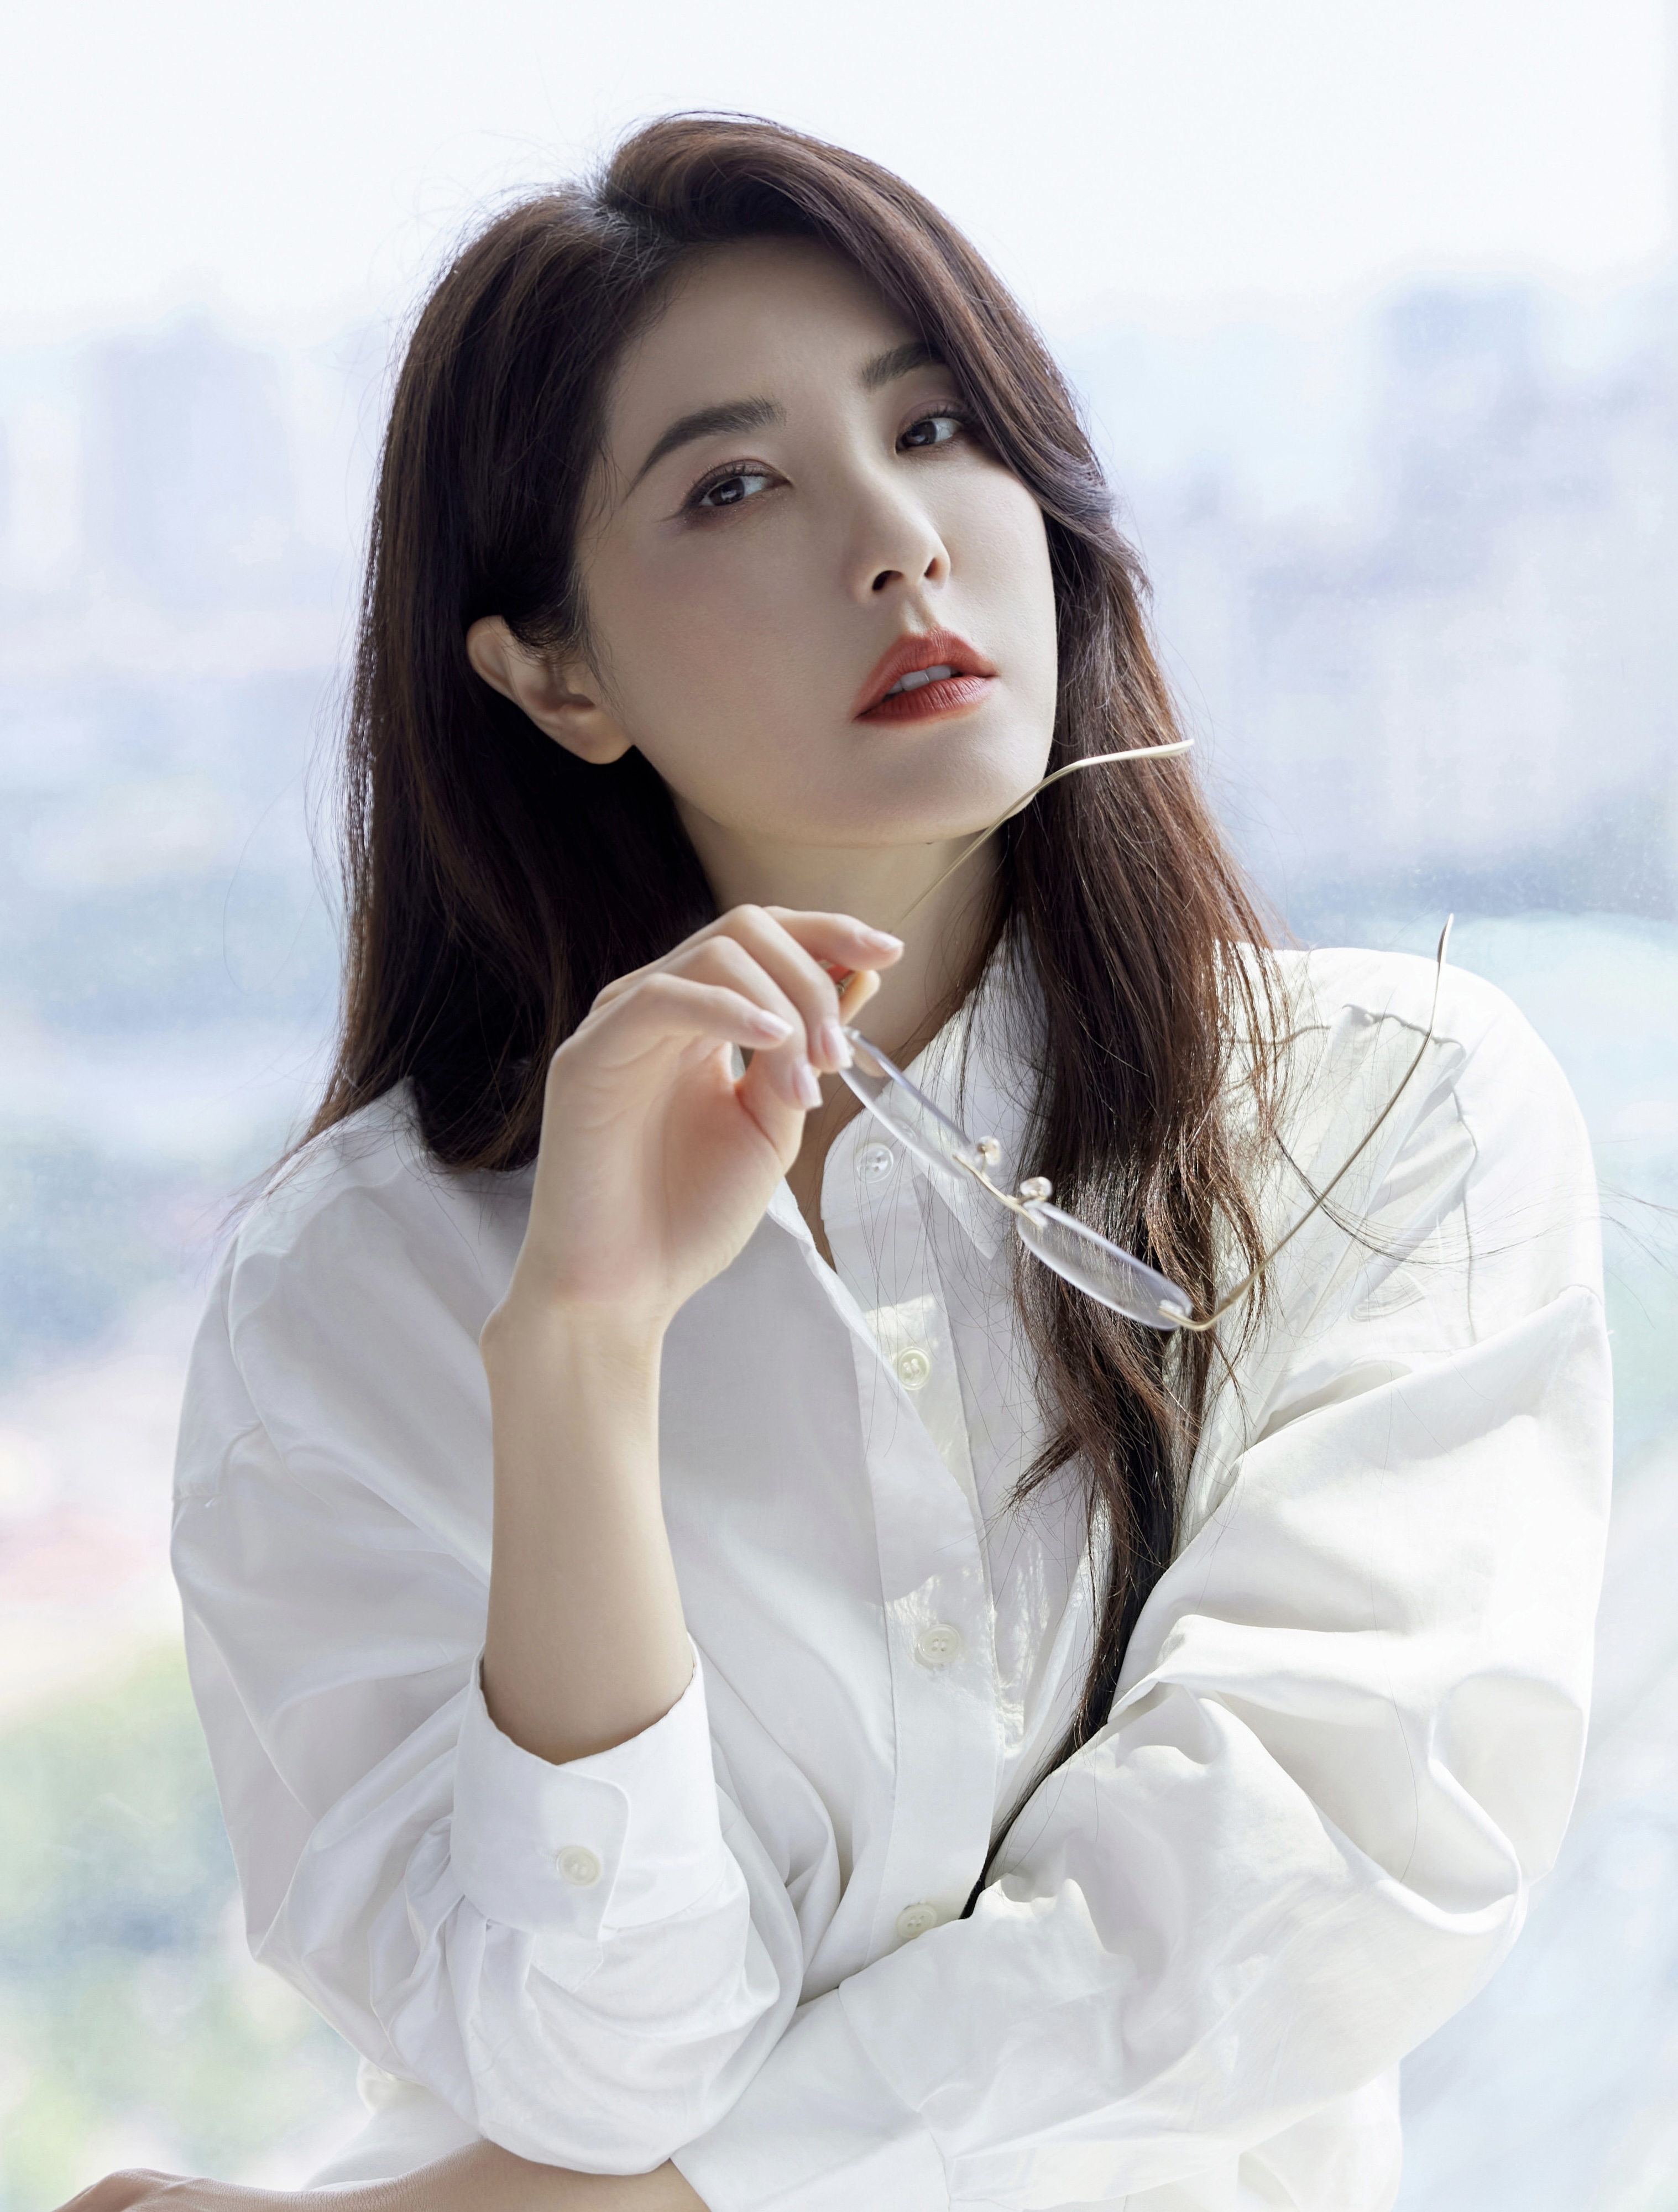 People 3035x4001 Asian women actress Zeng li dark hair glasses long hair white shirt red lipstick